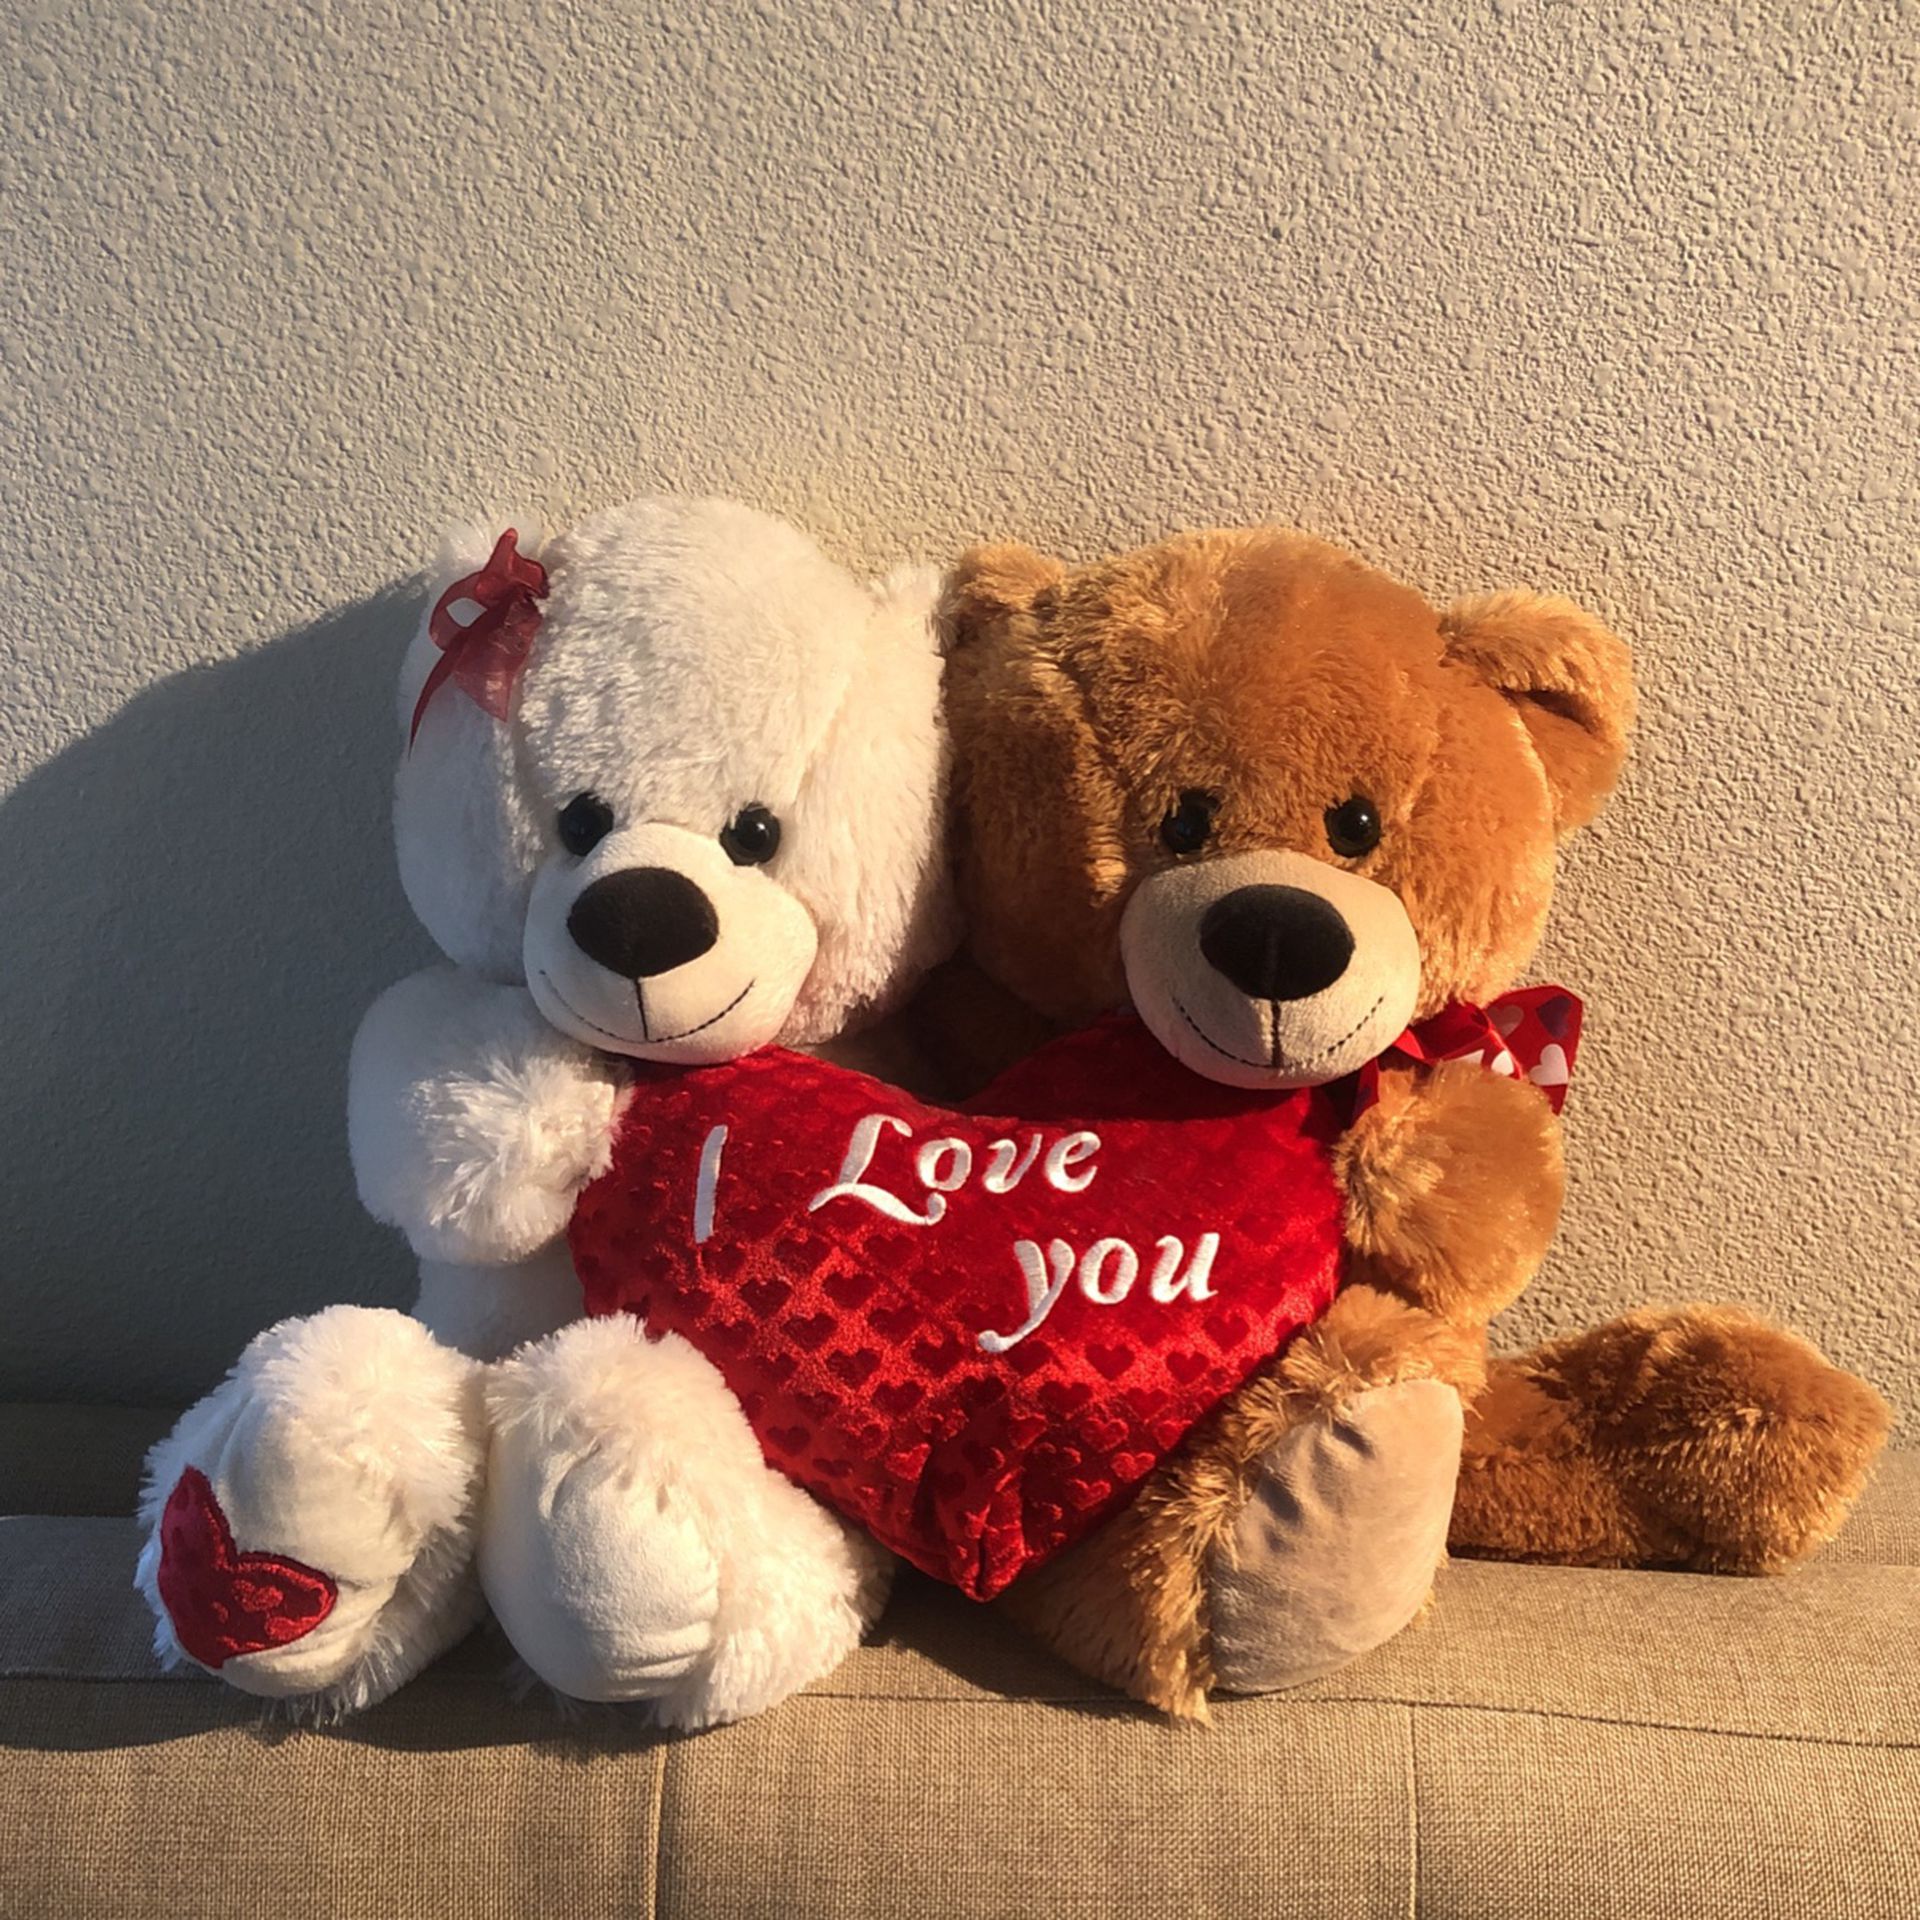 FREE Plush Teddy Bears Toy